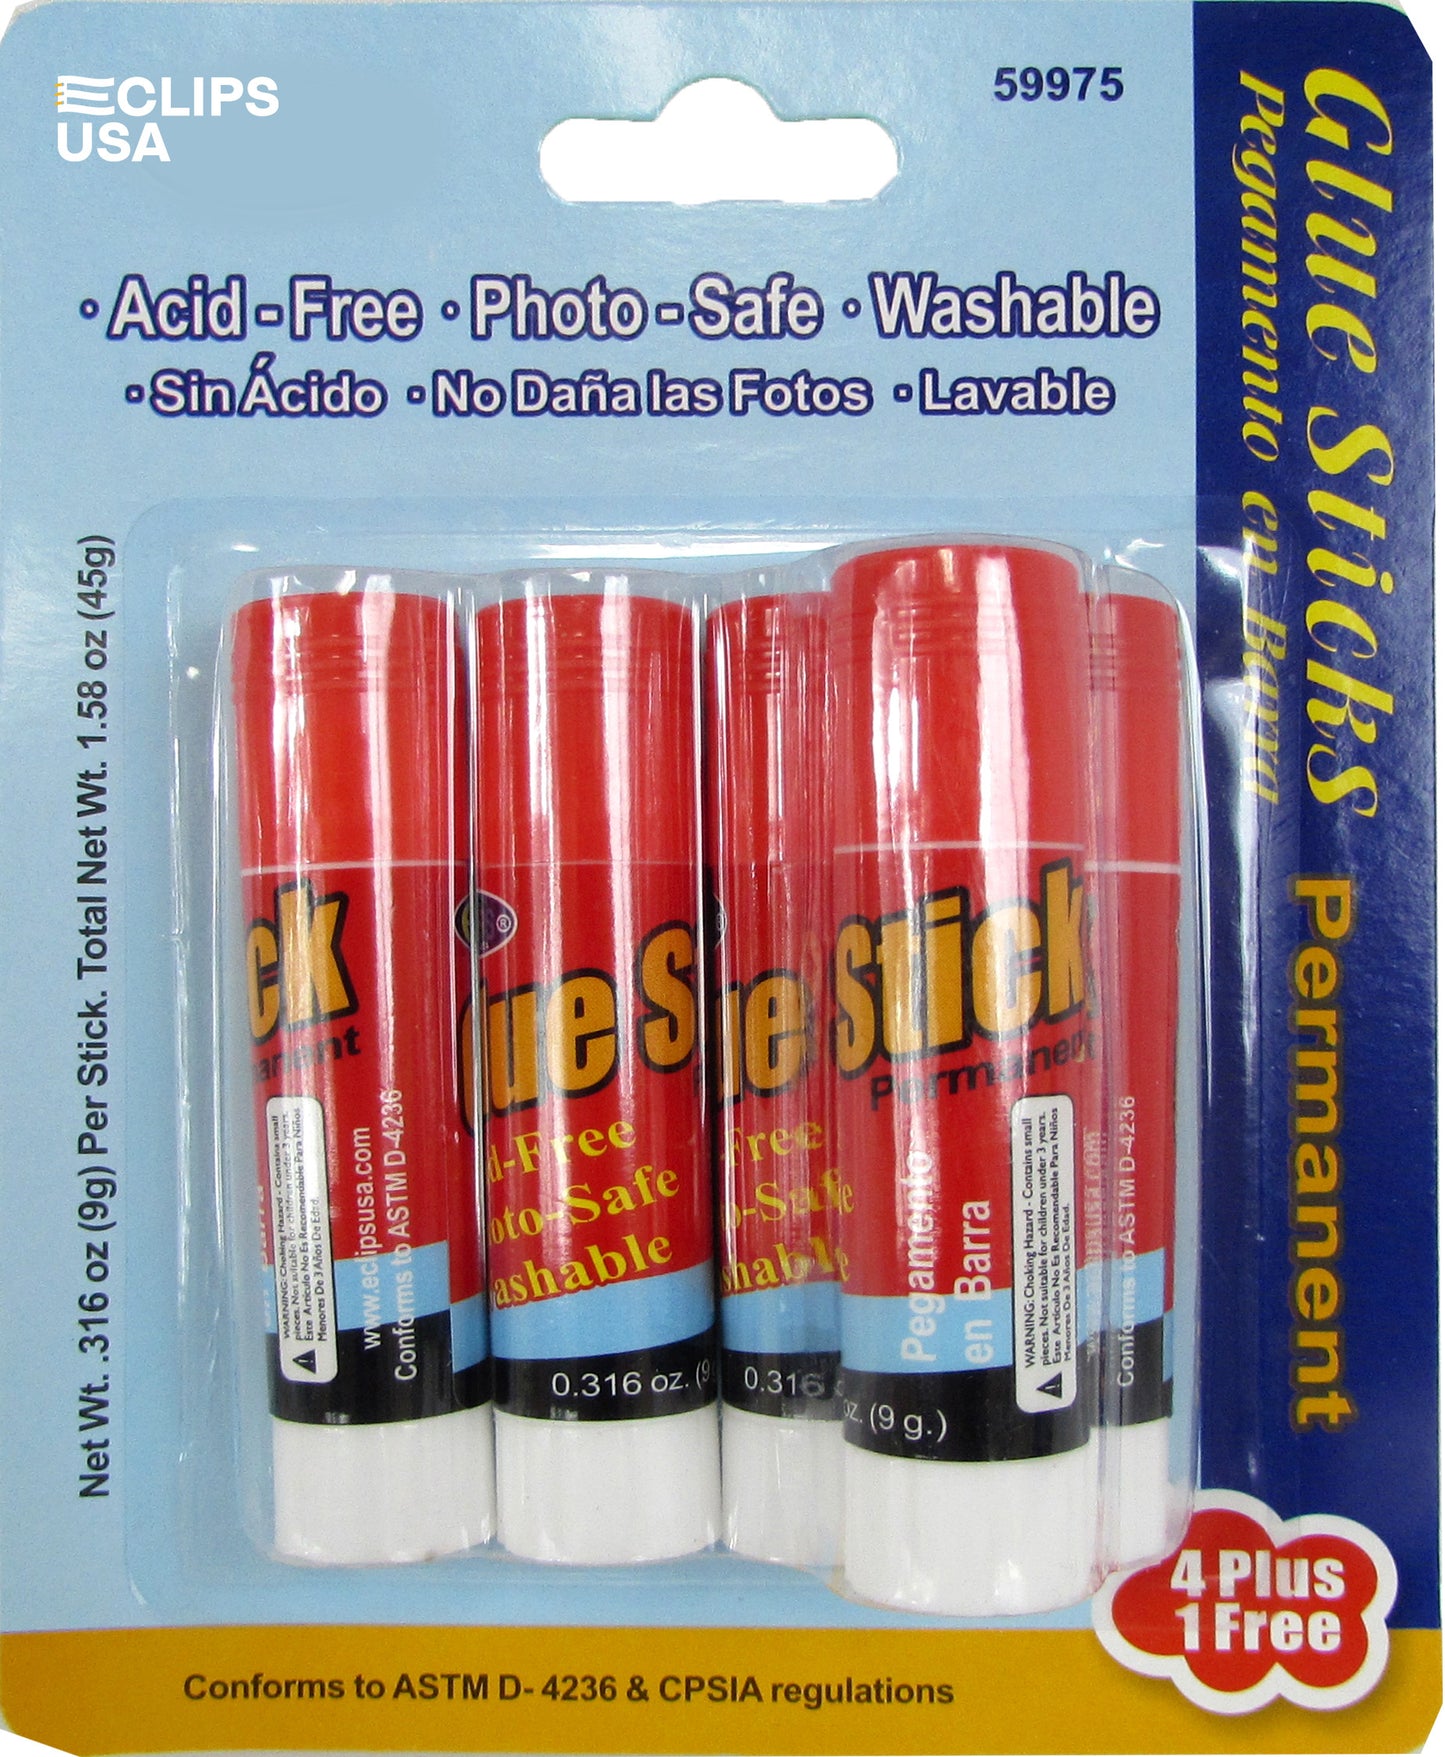 59975: Glue Sticks, Pack of 5